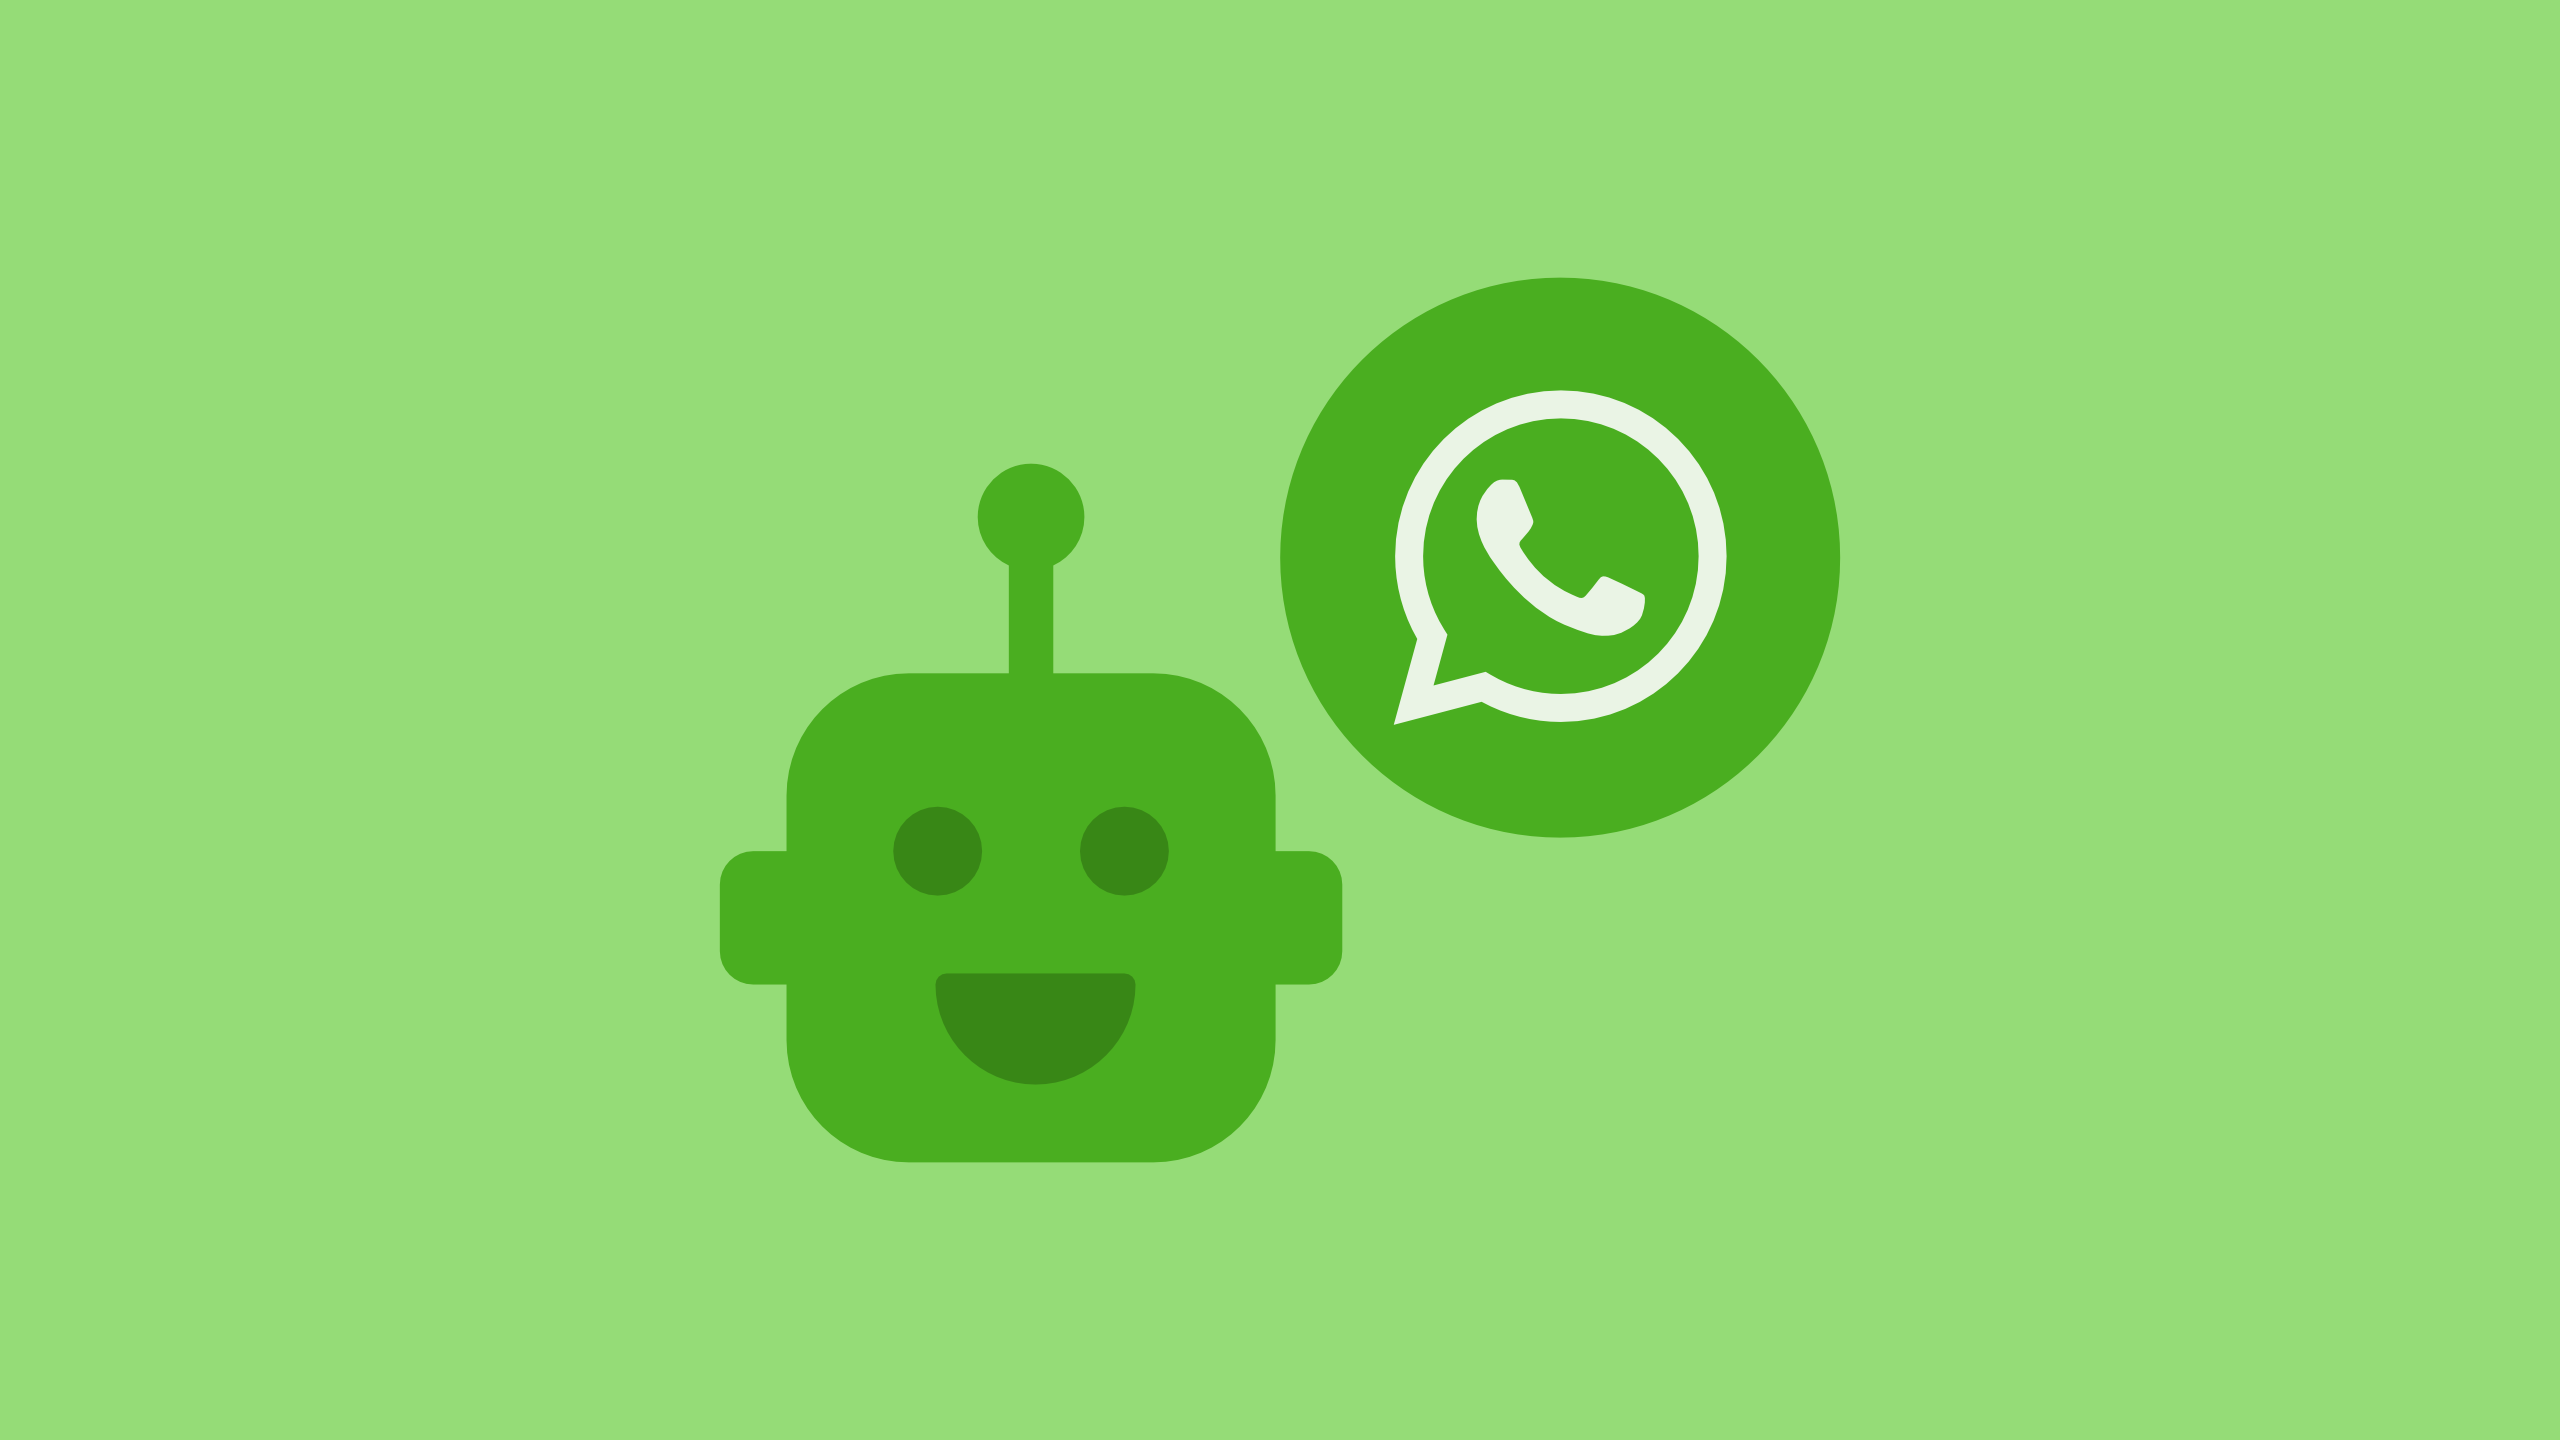 Sinch desarrolla BOT para WhatsApp